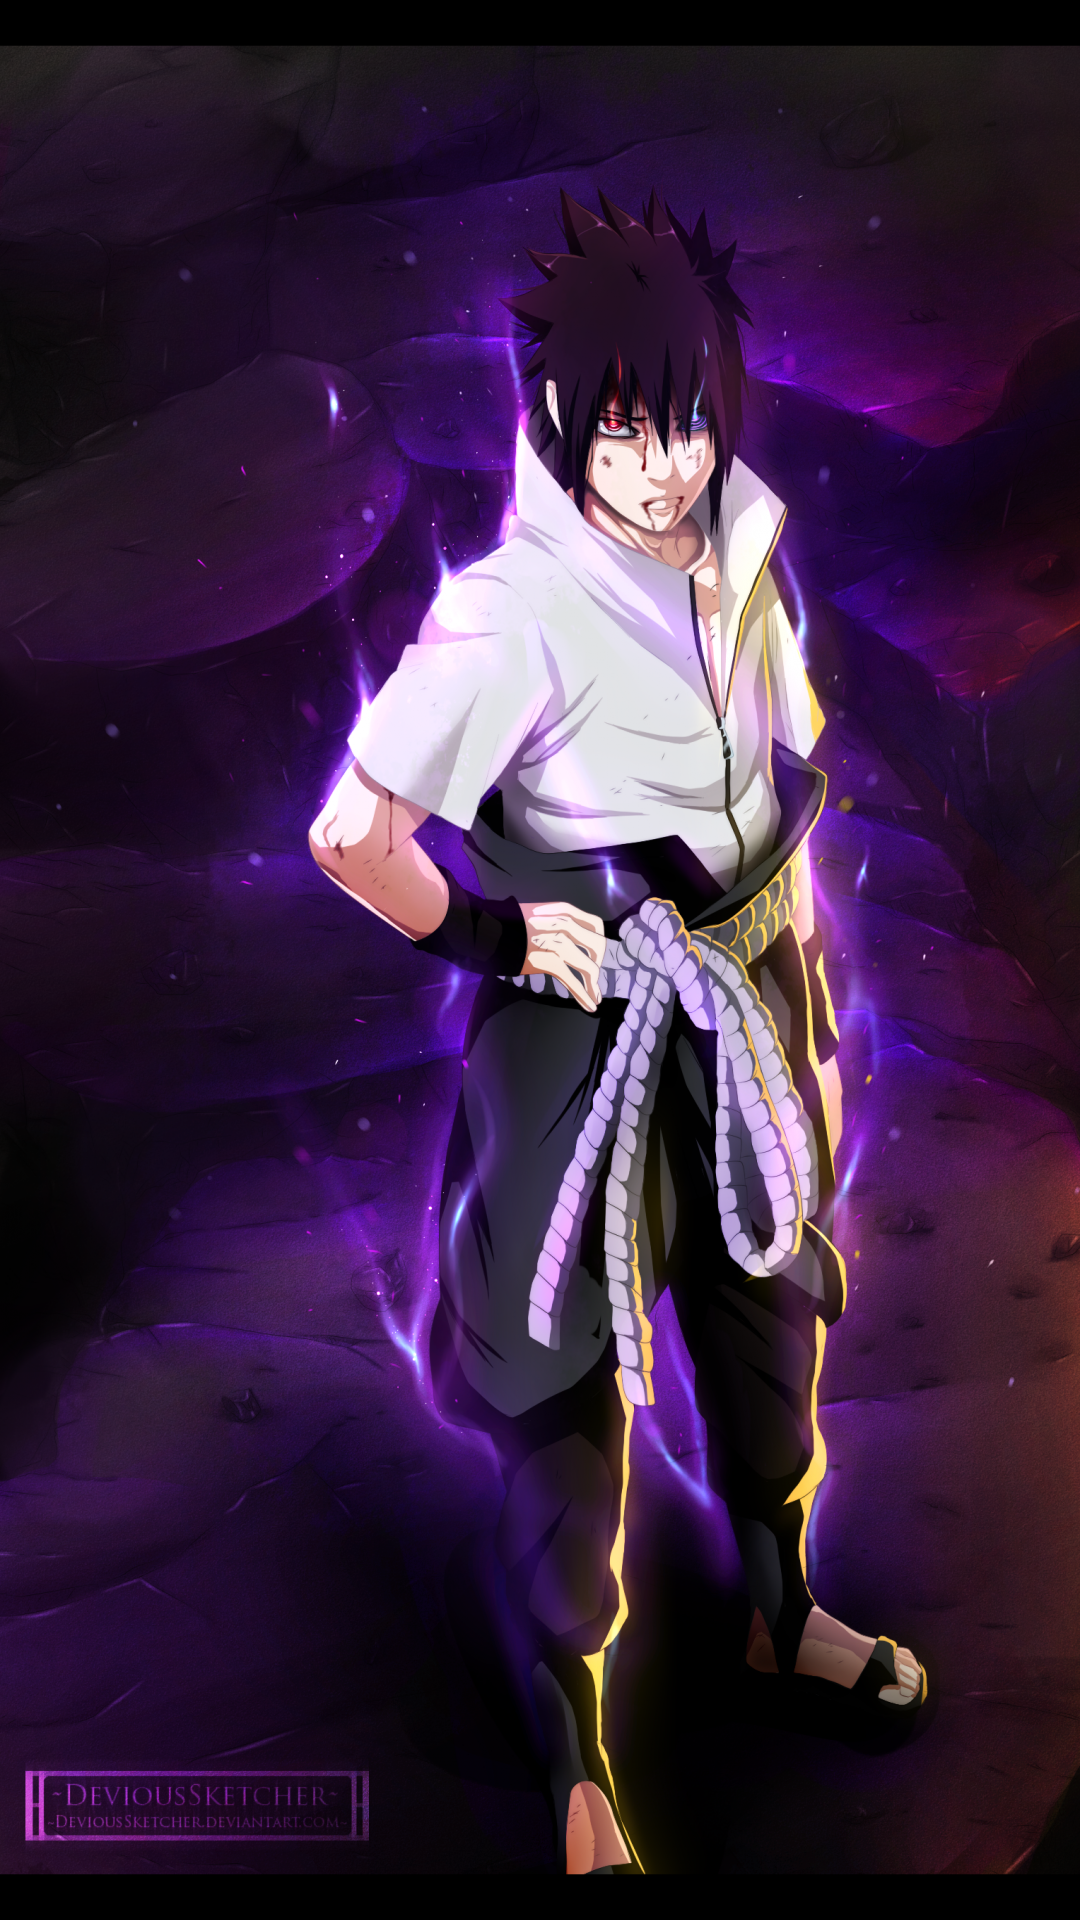 sasuke uchiha wallpaper iphone,anime,cartoon,purple,cg artwork,illustration